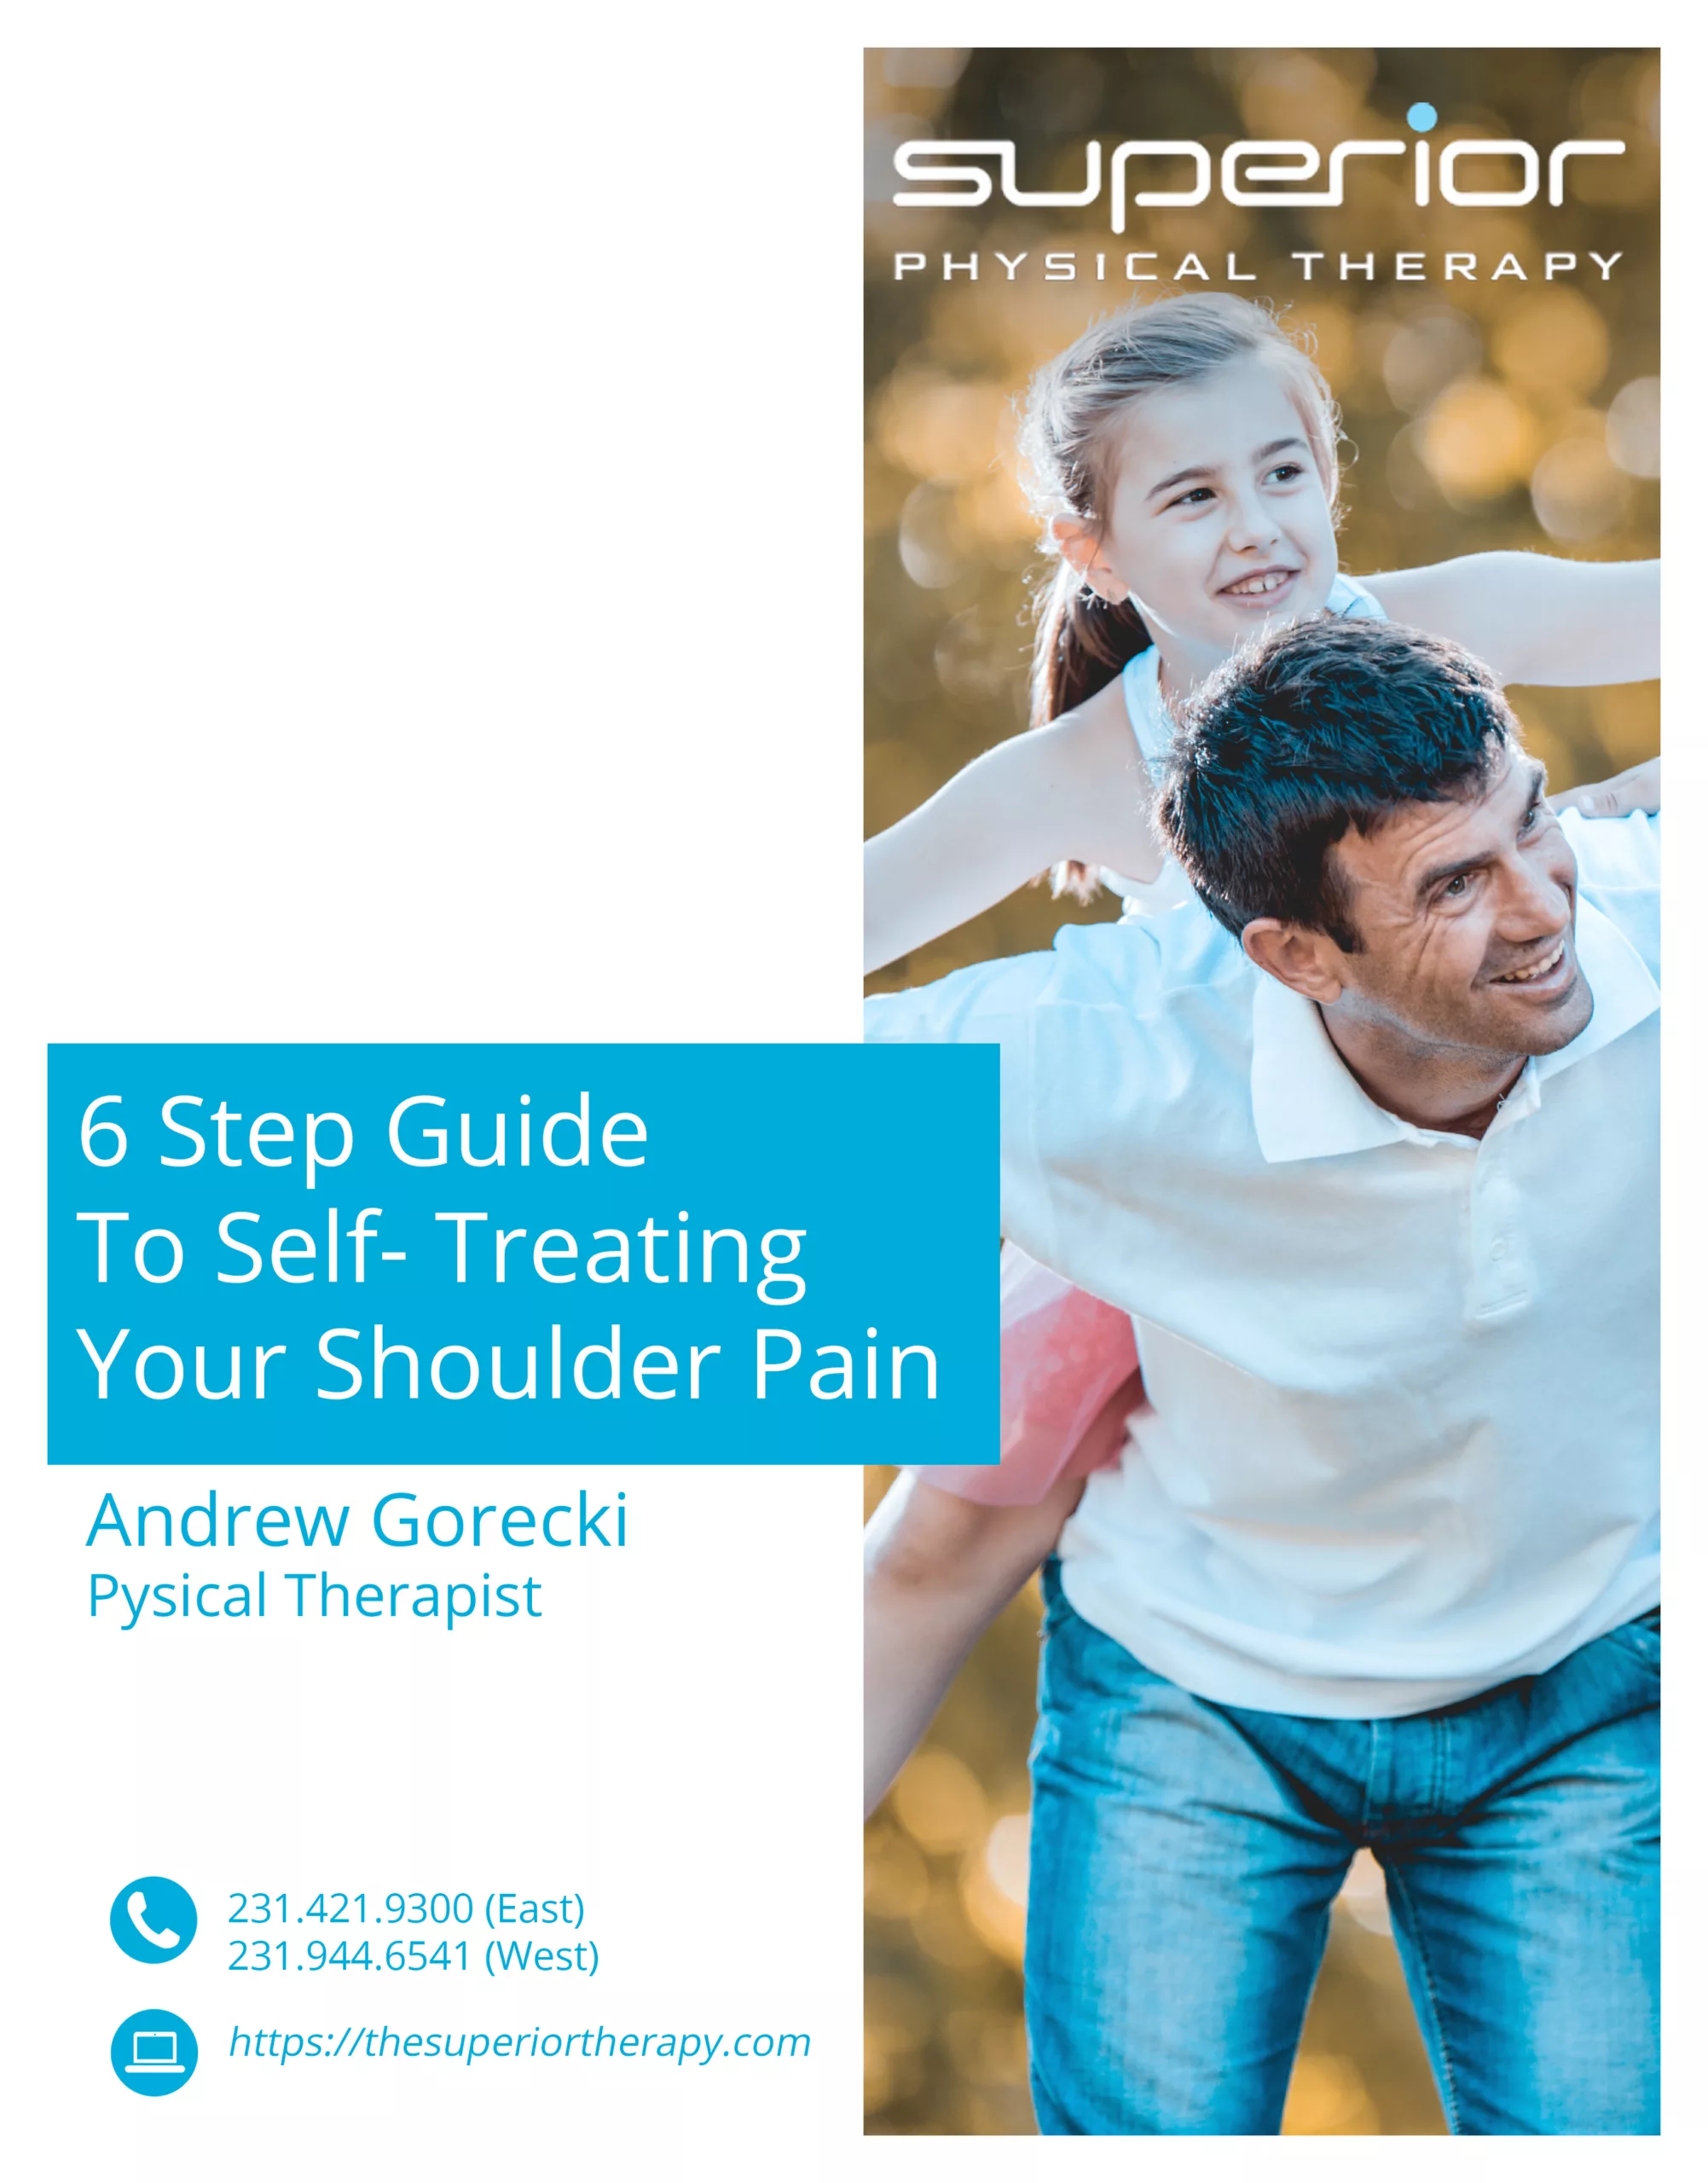 Shoulder Pain Guide - Free Download